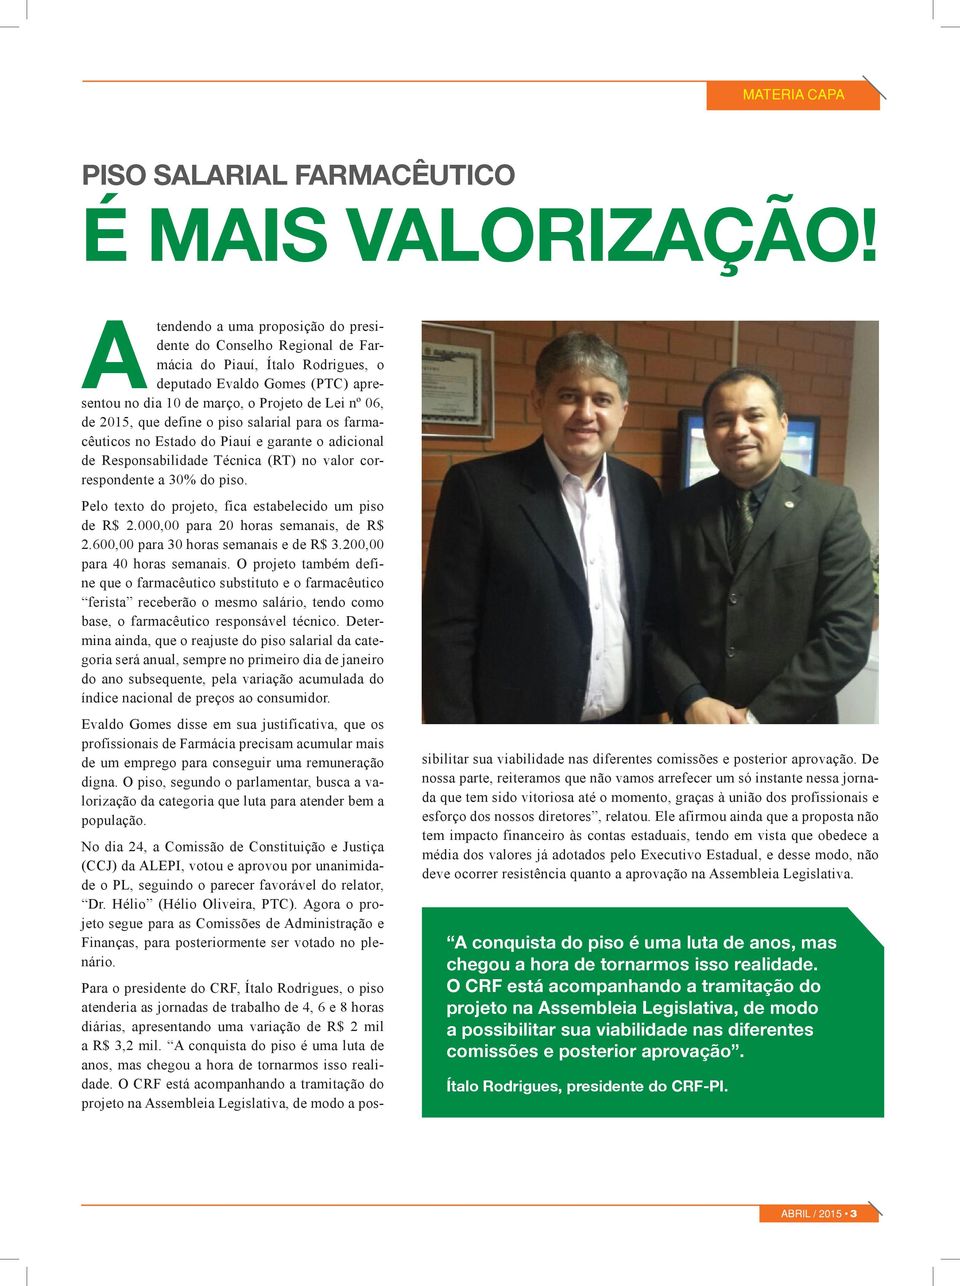 define o piso salarial para os farmacêuticos no Estado do Piauí e garante o adicional de Responsabilidade Técnica (RT) no valor correspondente a 30% do piso.